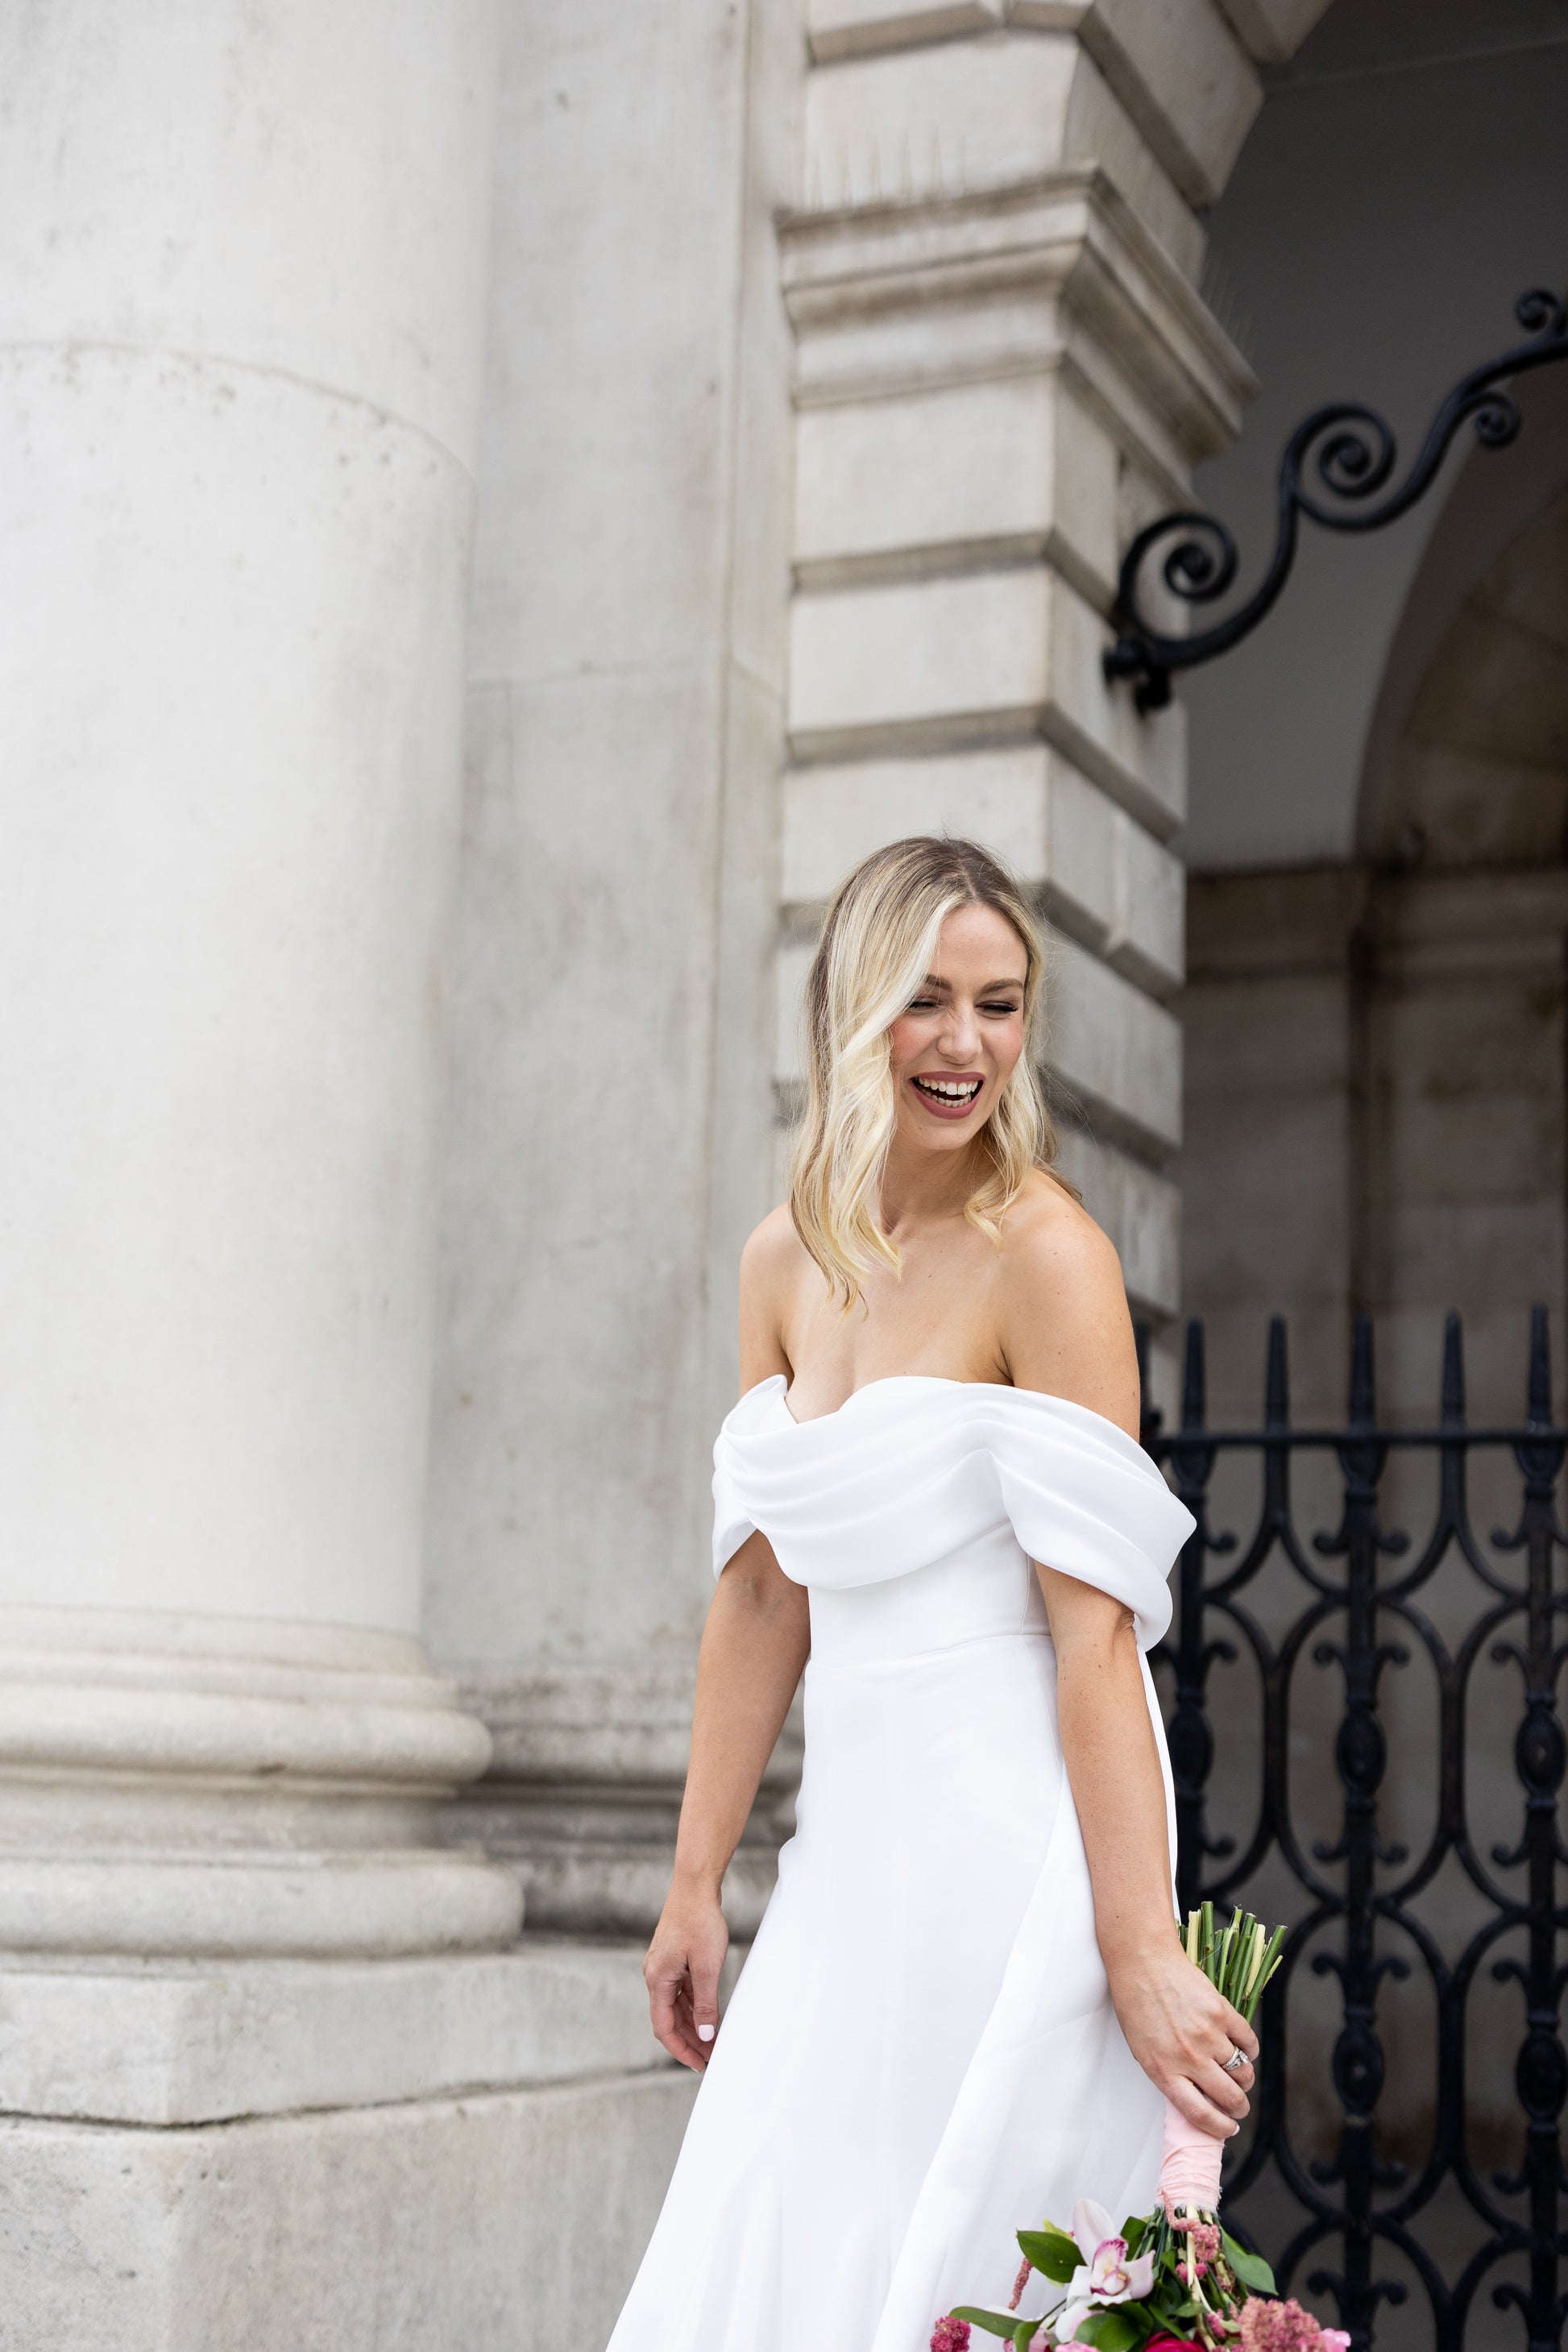 Irish bride wearing a sexy fitted wedding dress in Ireland 